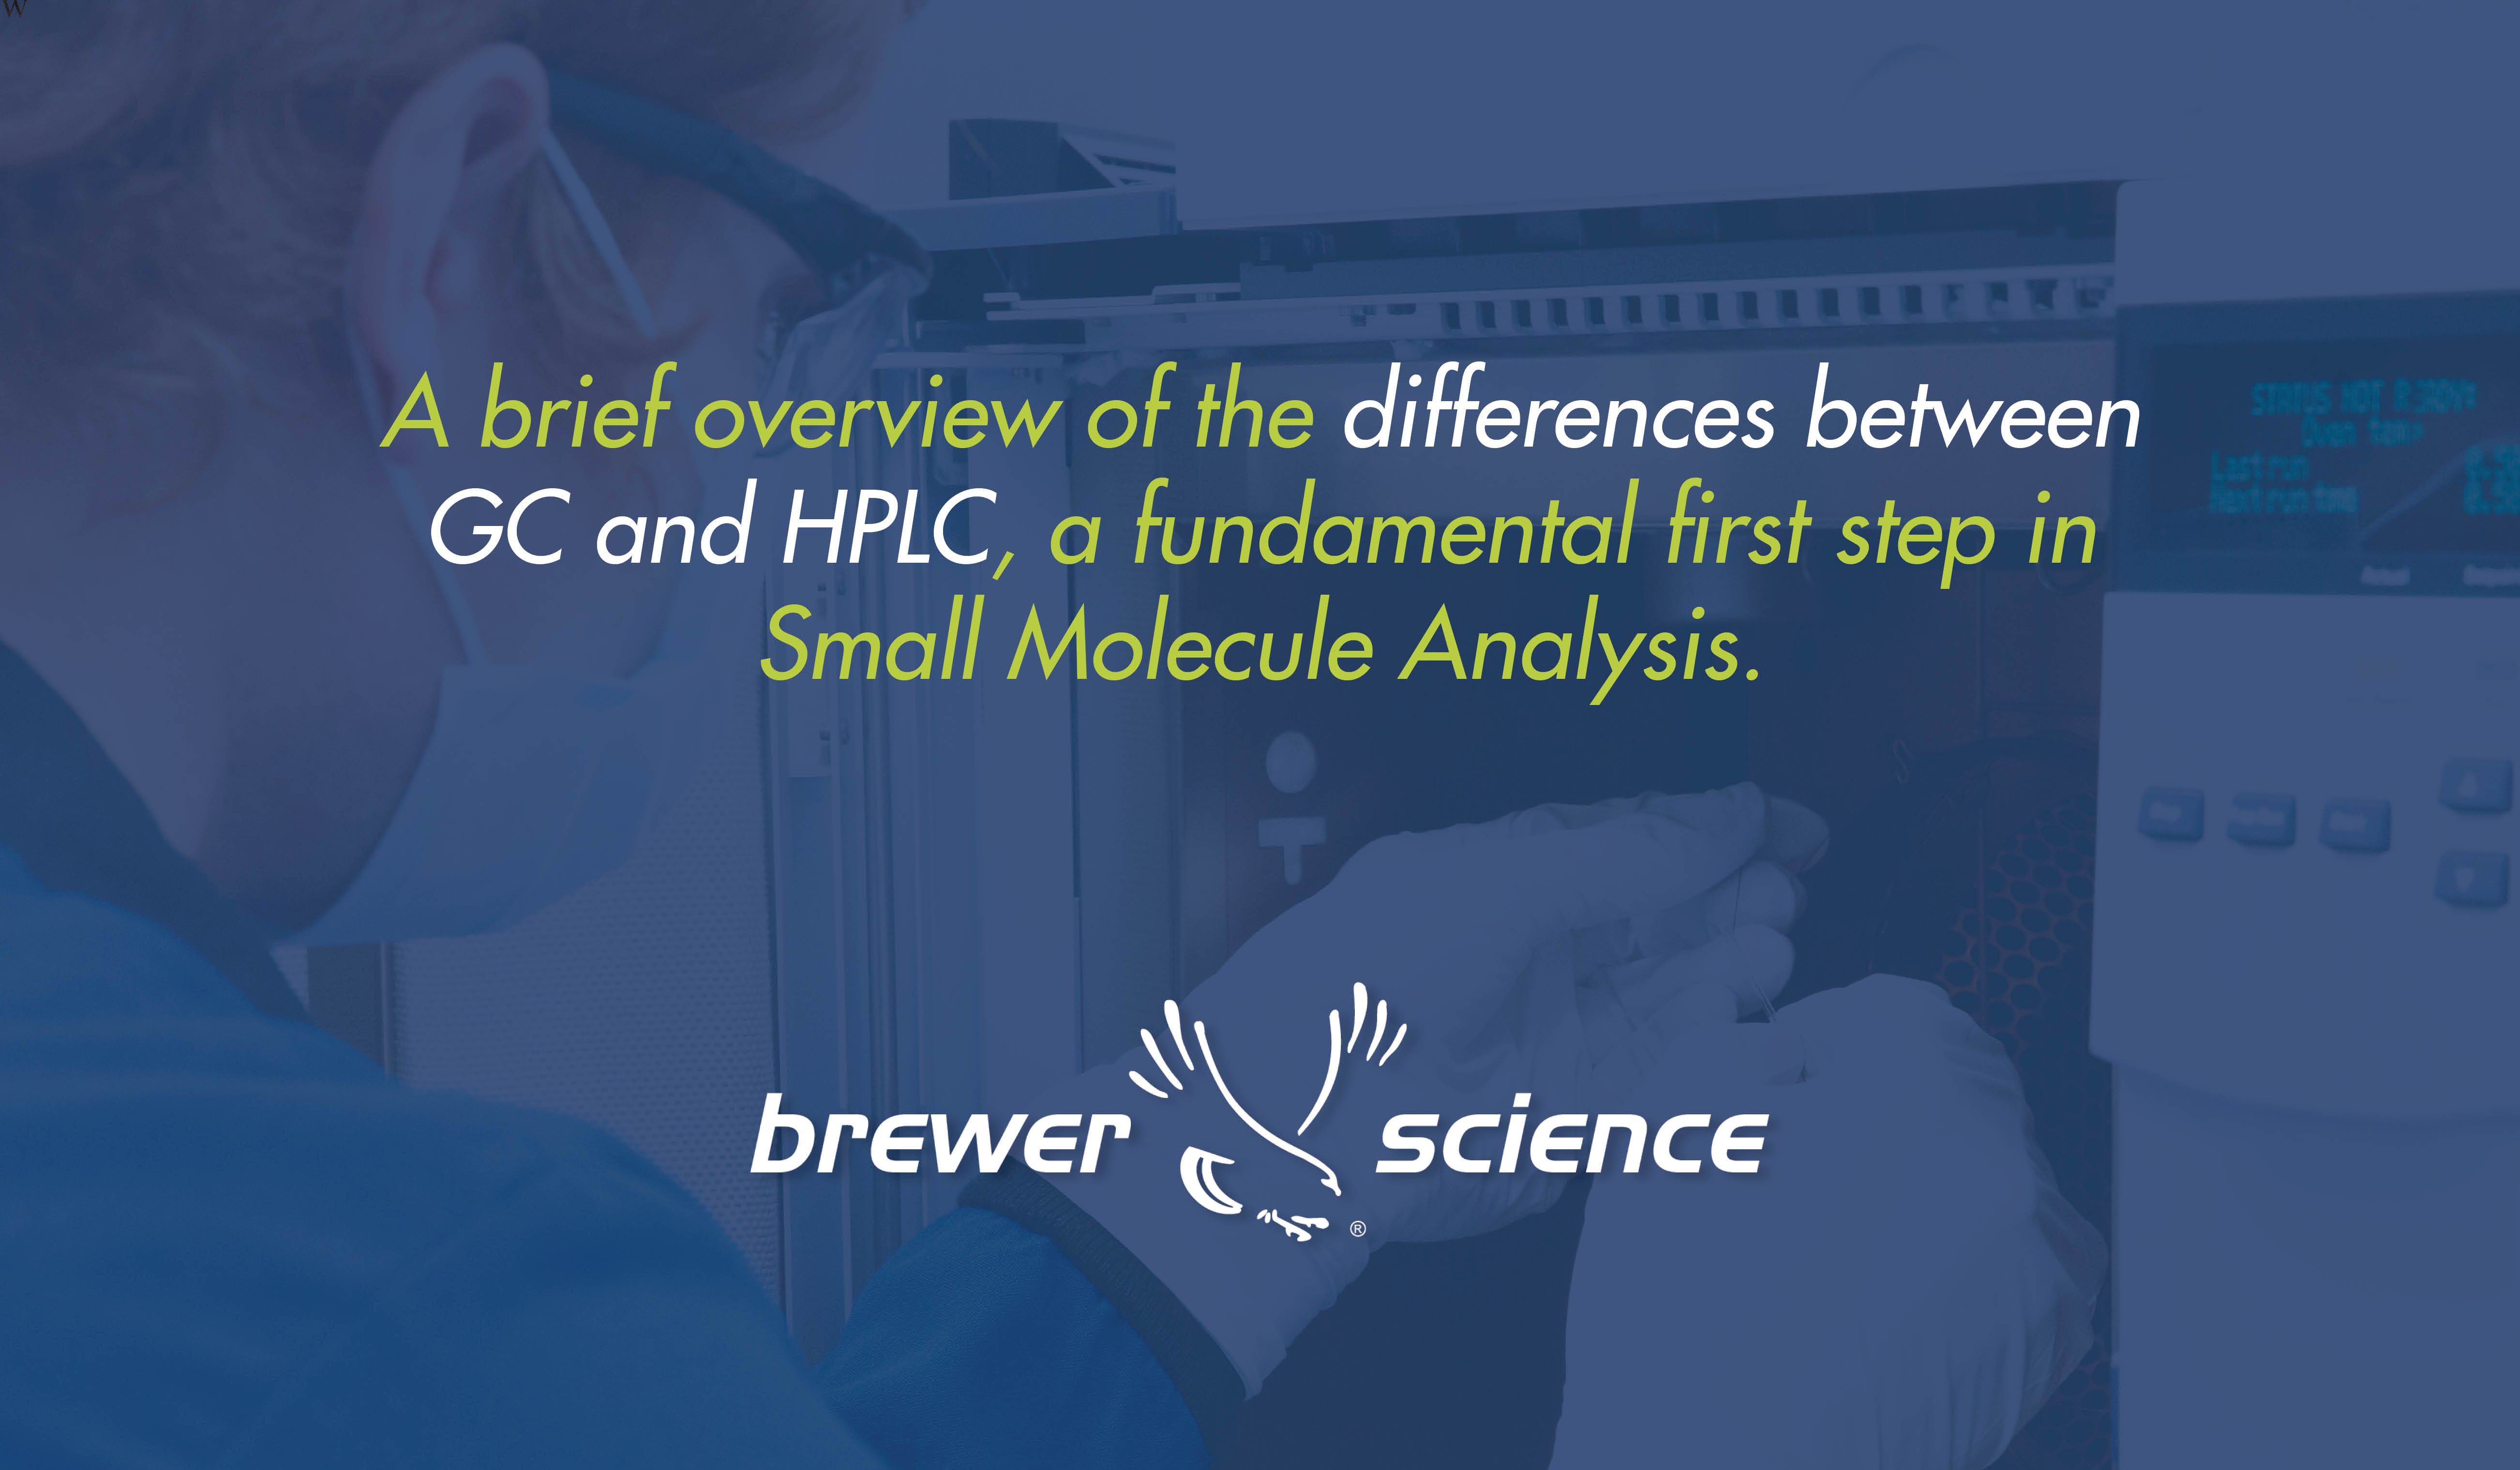 Small Molecule Analysis Testing: HPLC vs GC